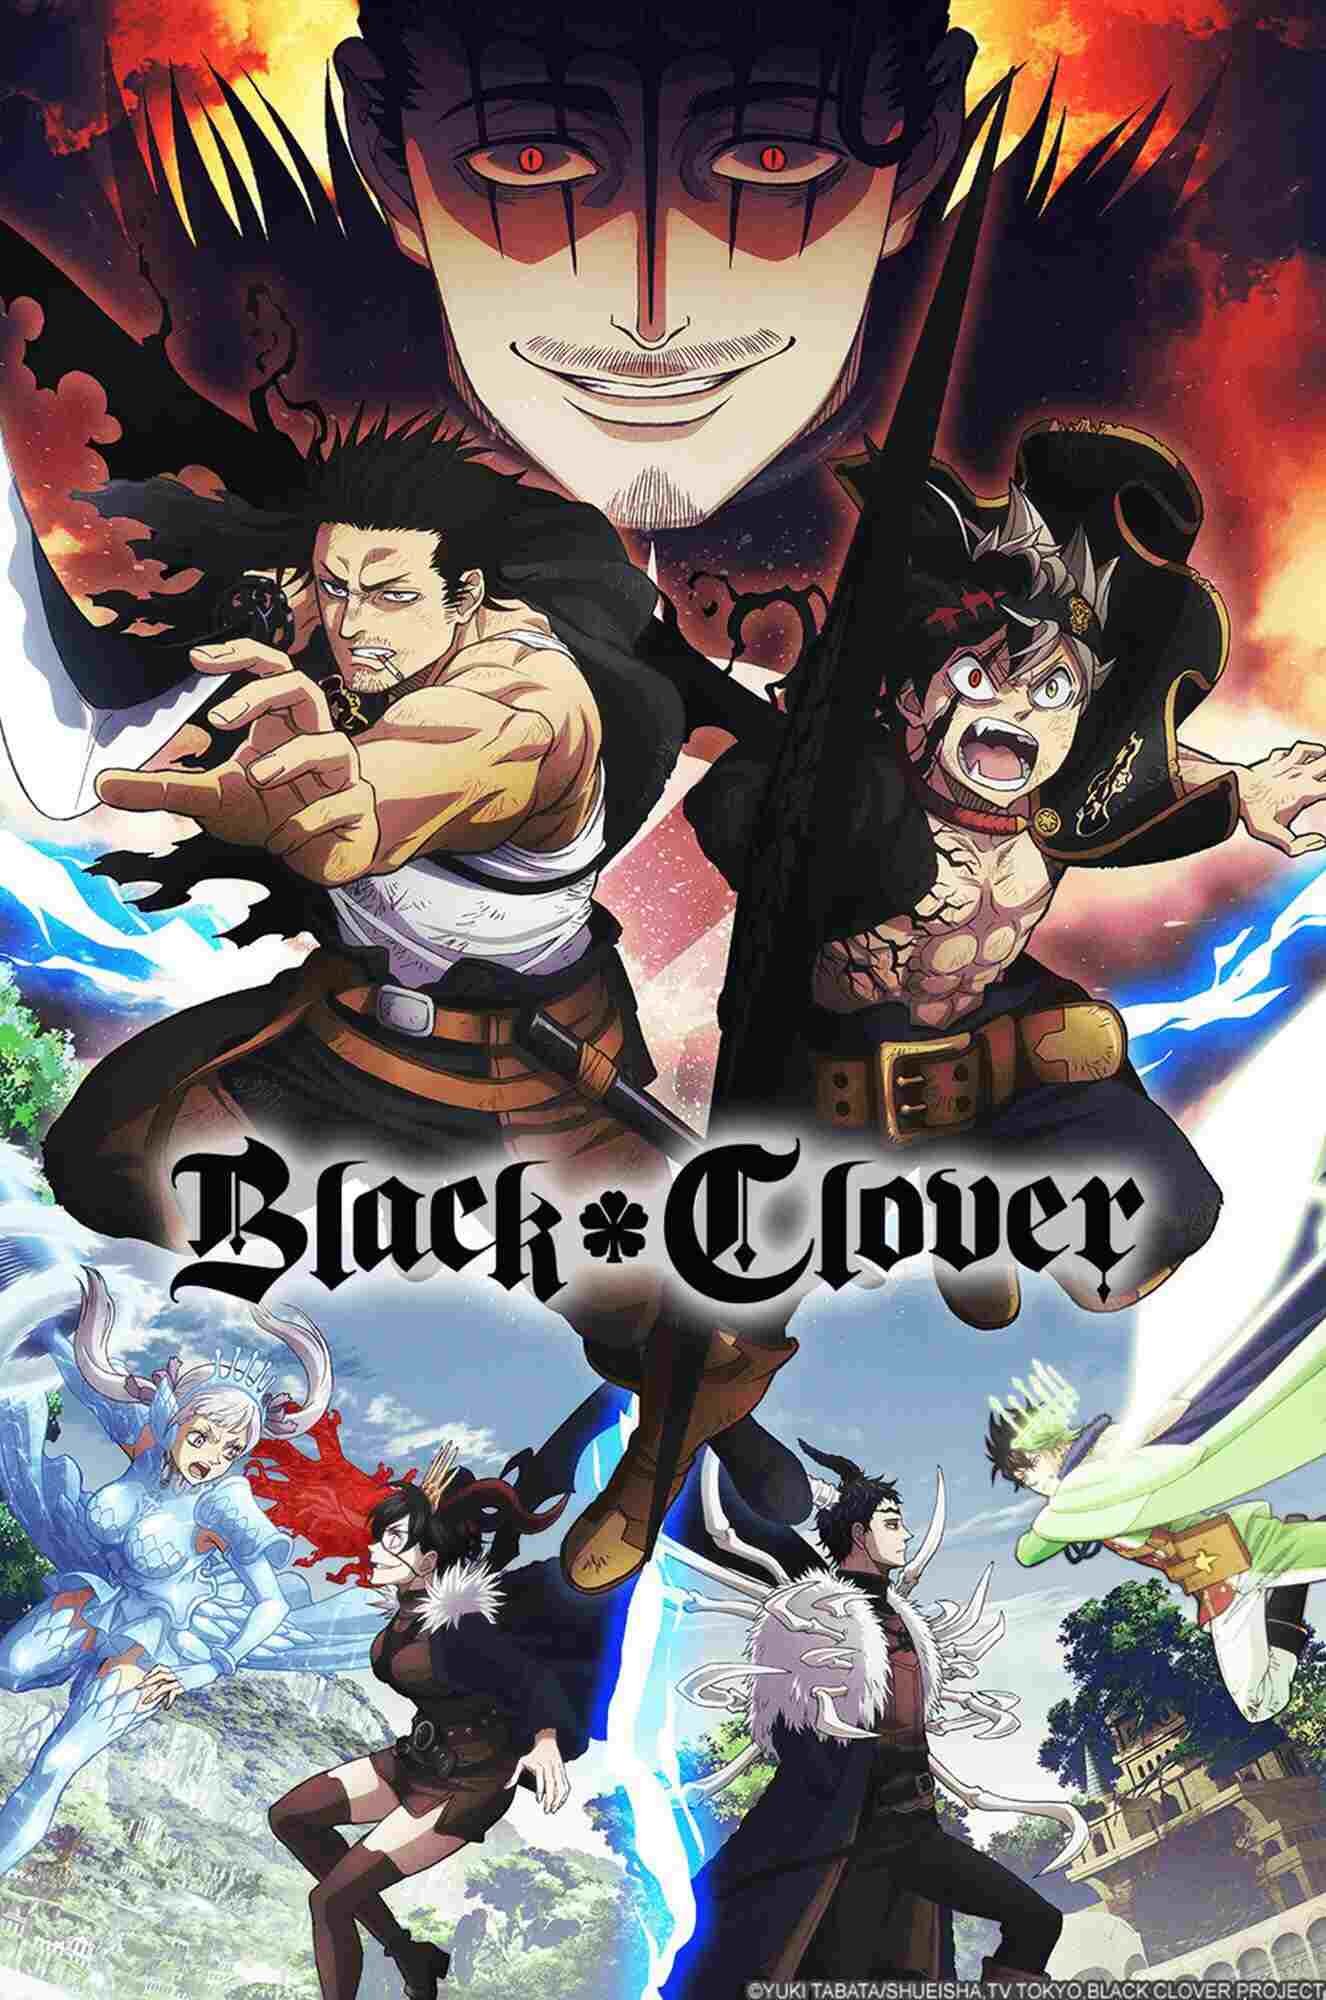 Arc Clover Kingdom vs Spade Kingdom, Black Clover